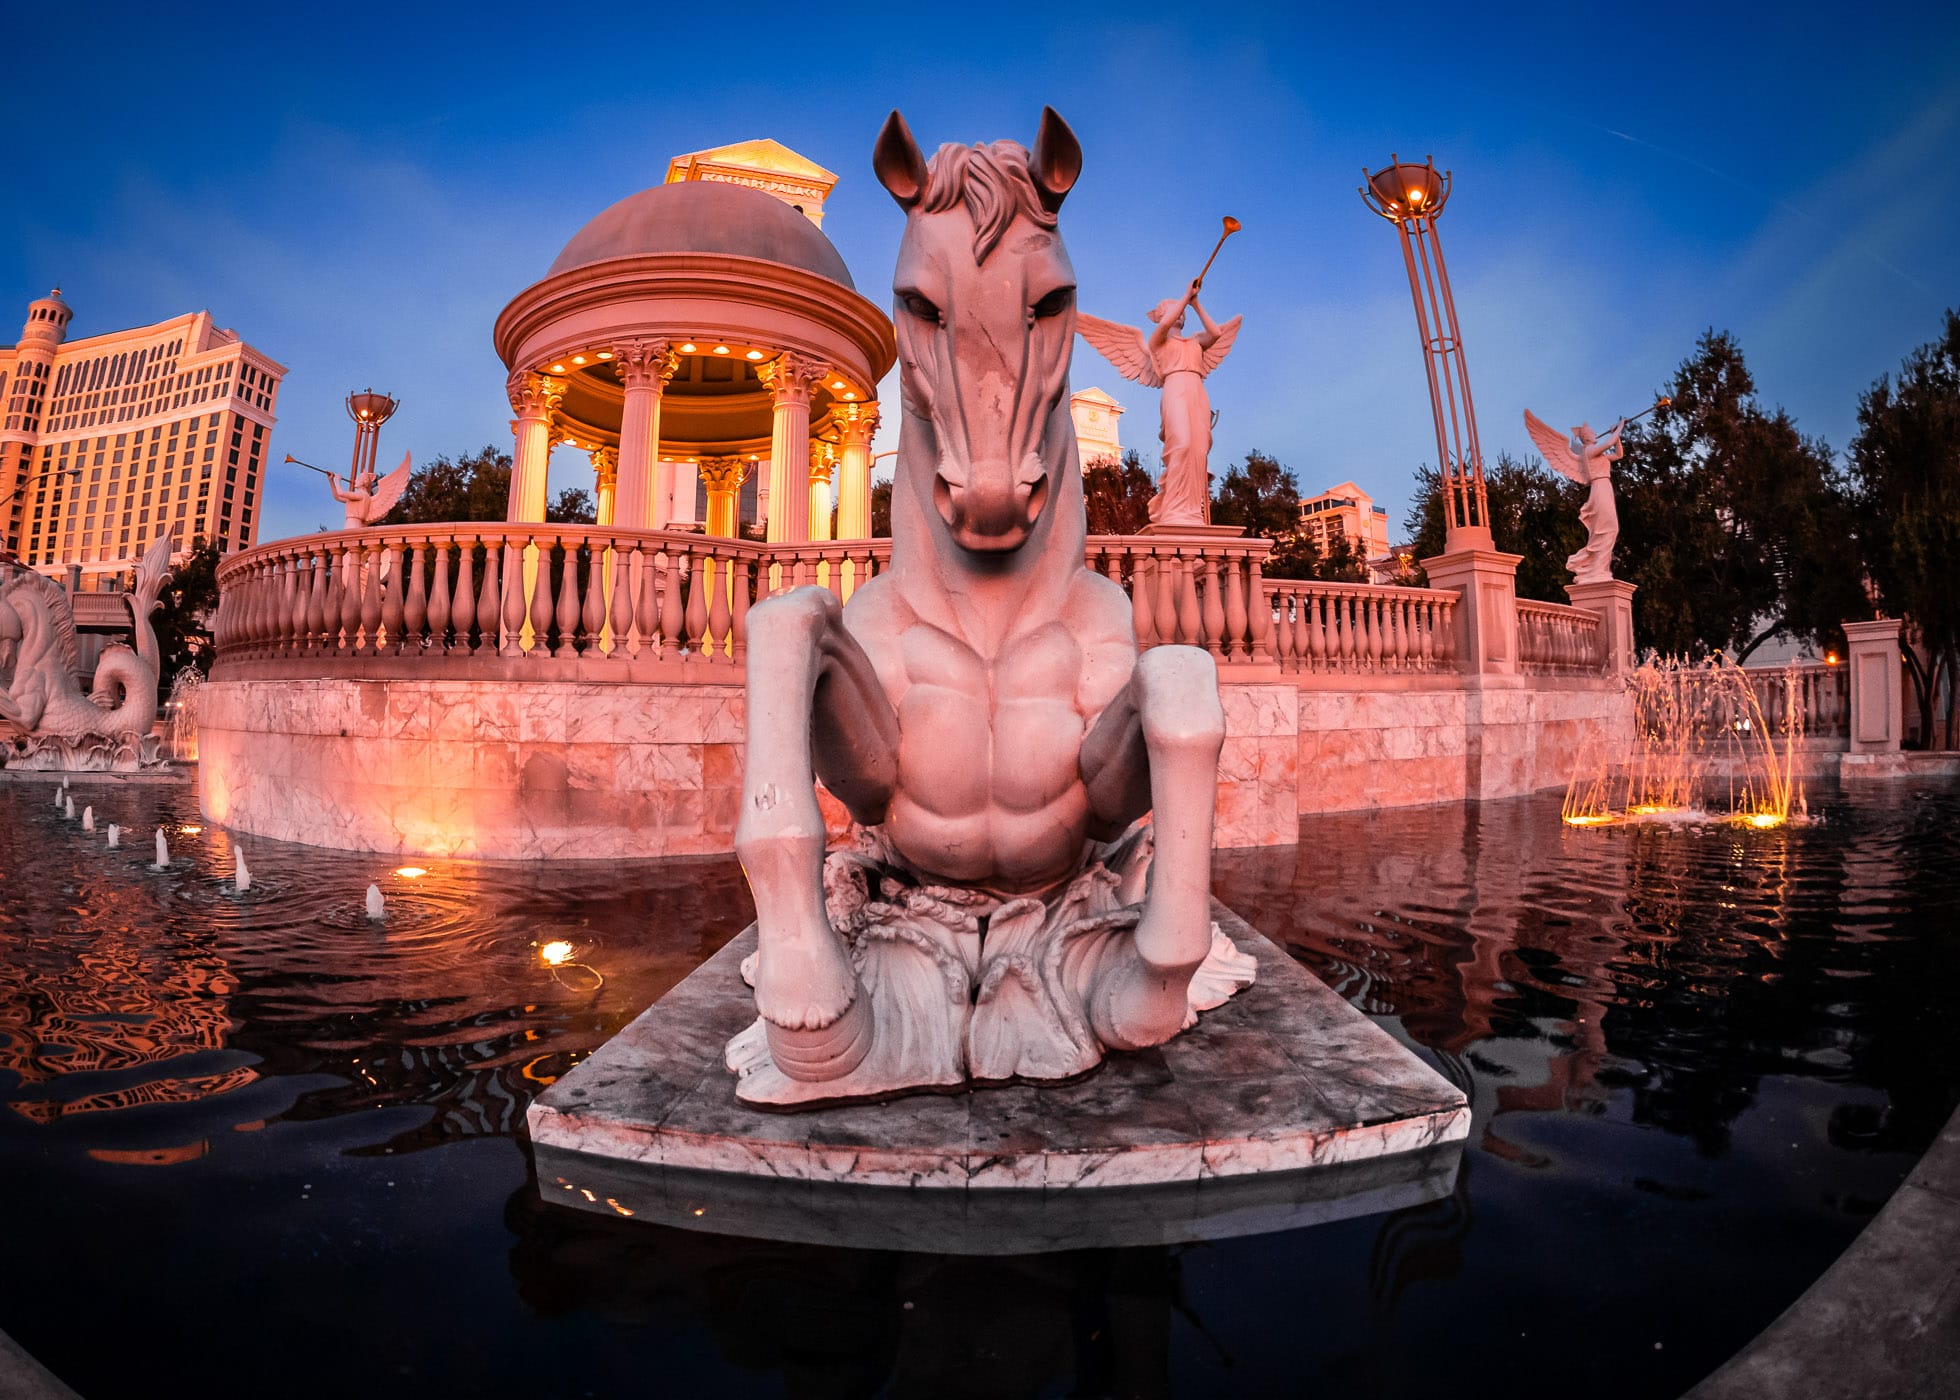 A statue of a horse at Caesars Palace, Las Vegas.